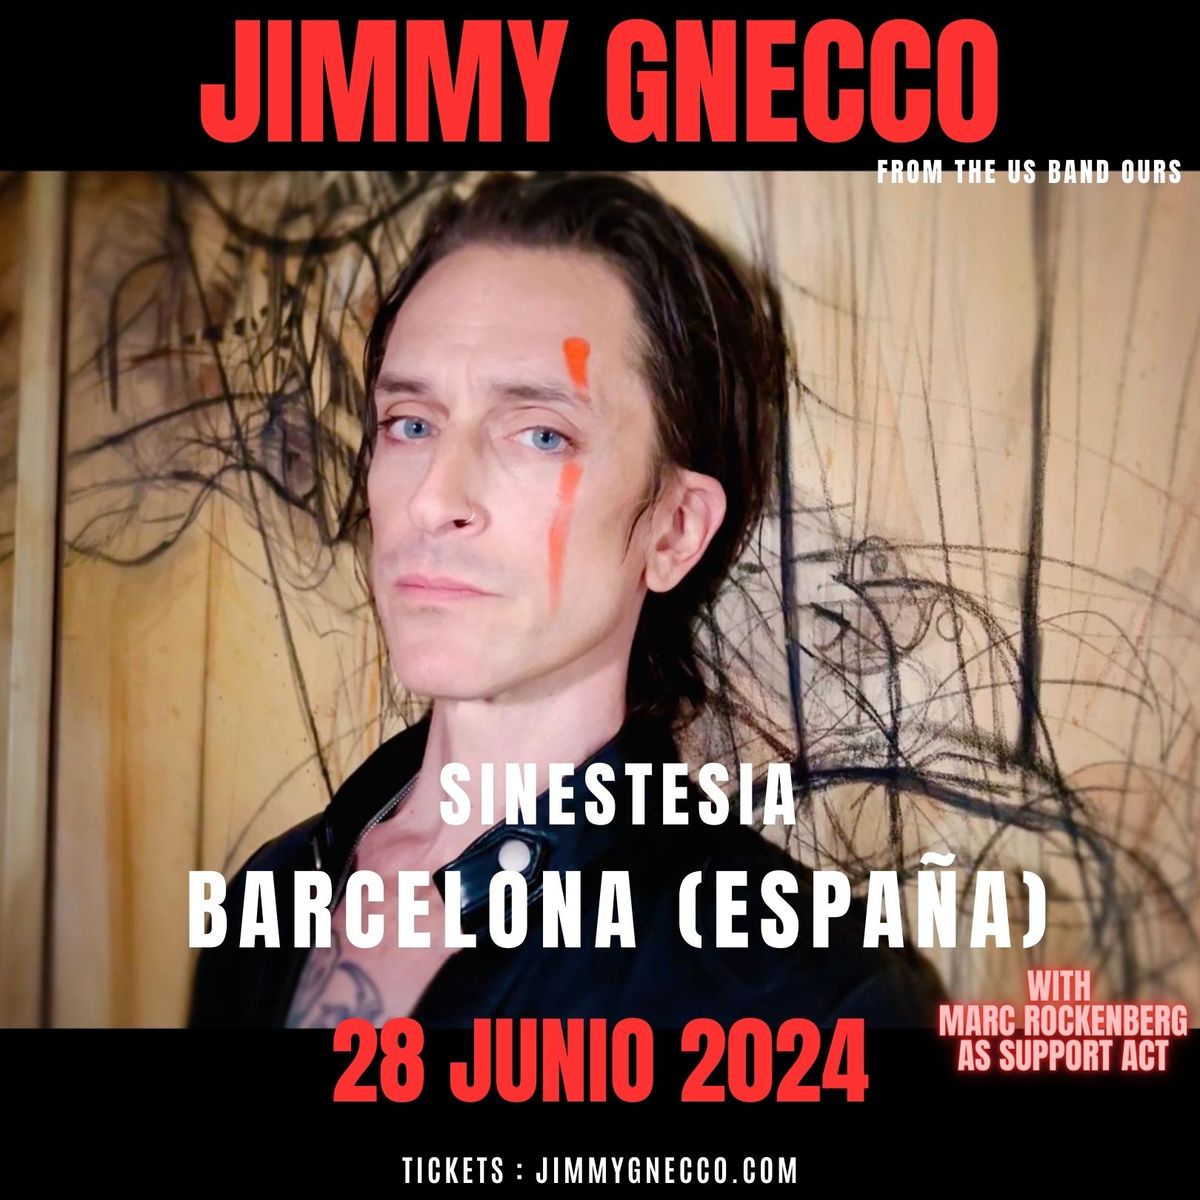 Jimmy Gnecco in Barcelona, Spain